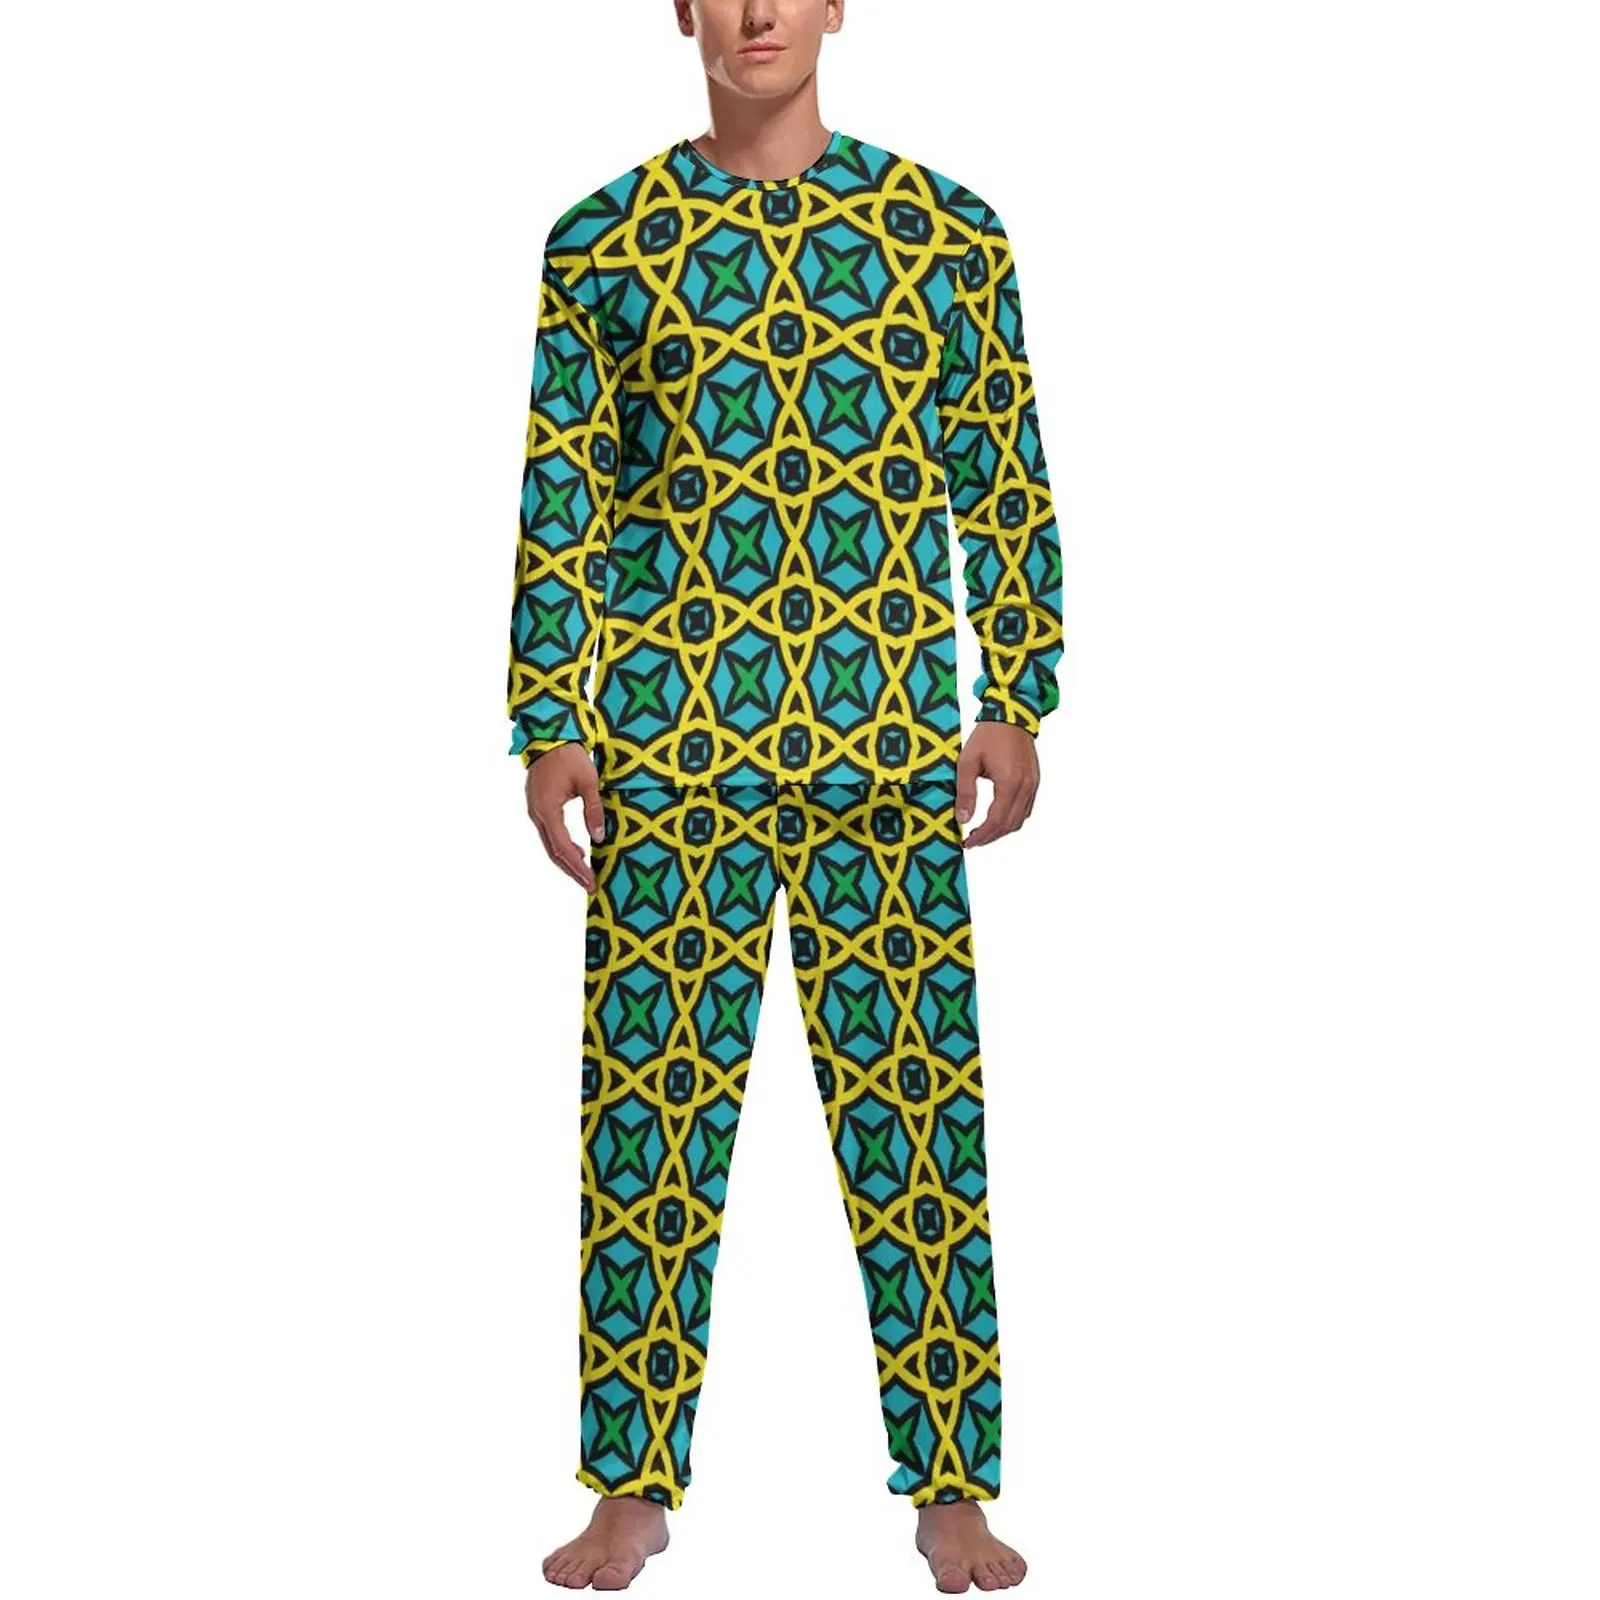 Colorful Geo Print Pajamas Long Sleeves Abstract Circles Two Piece Casual Pajama Sets Autumn Male Graphic Kawaii Nightwear